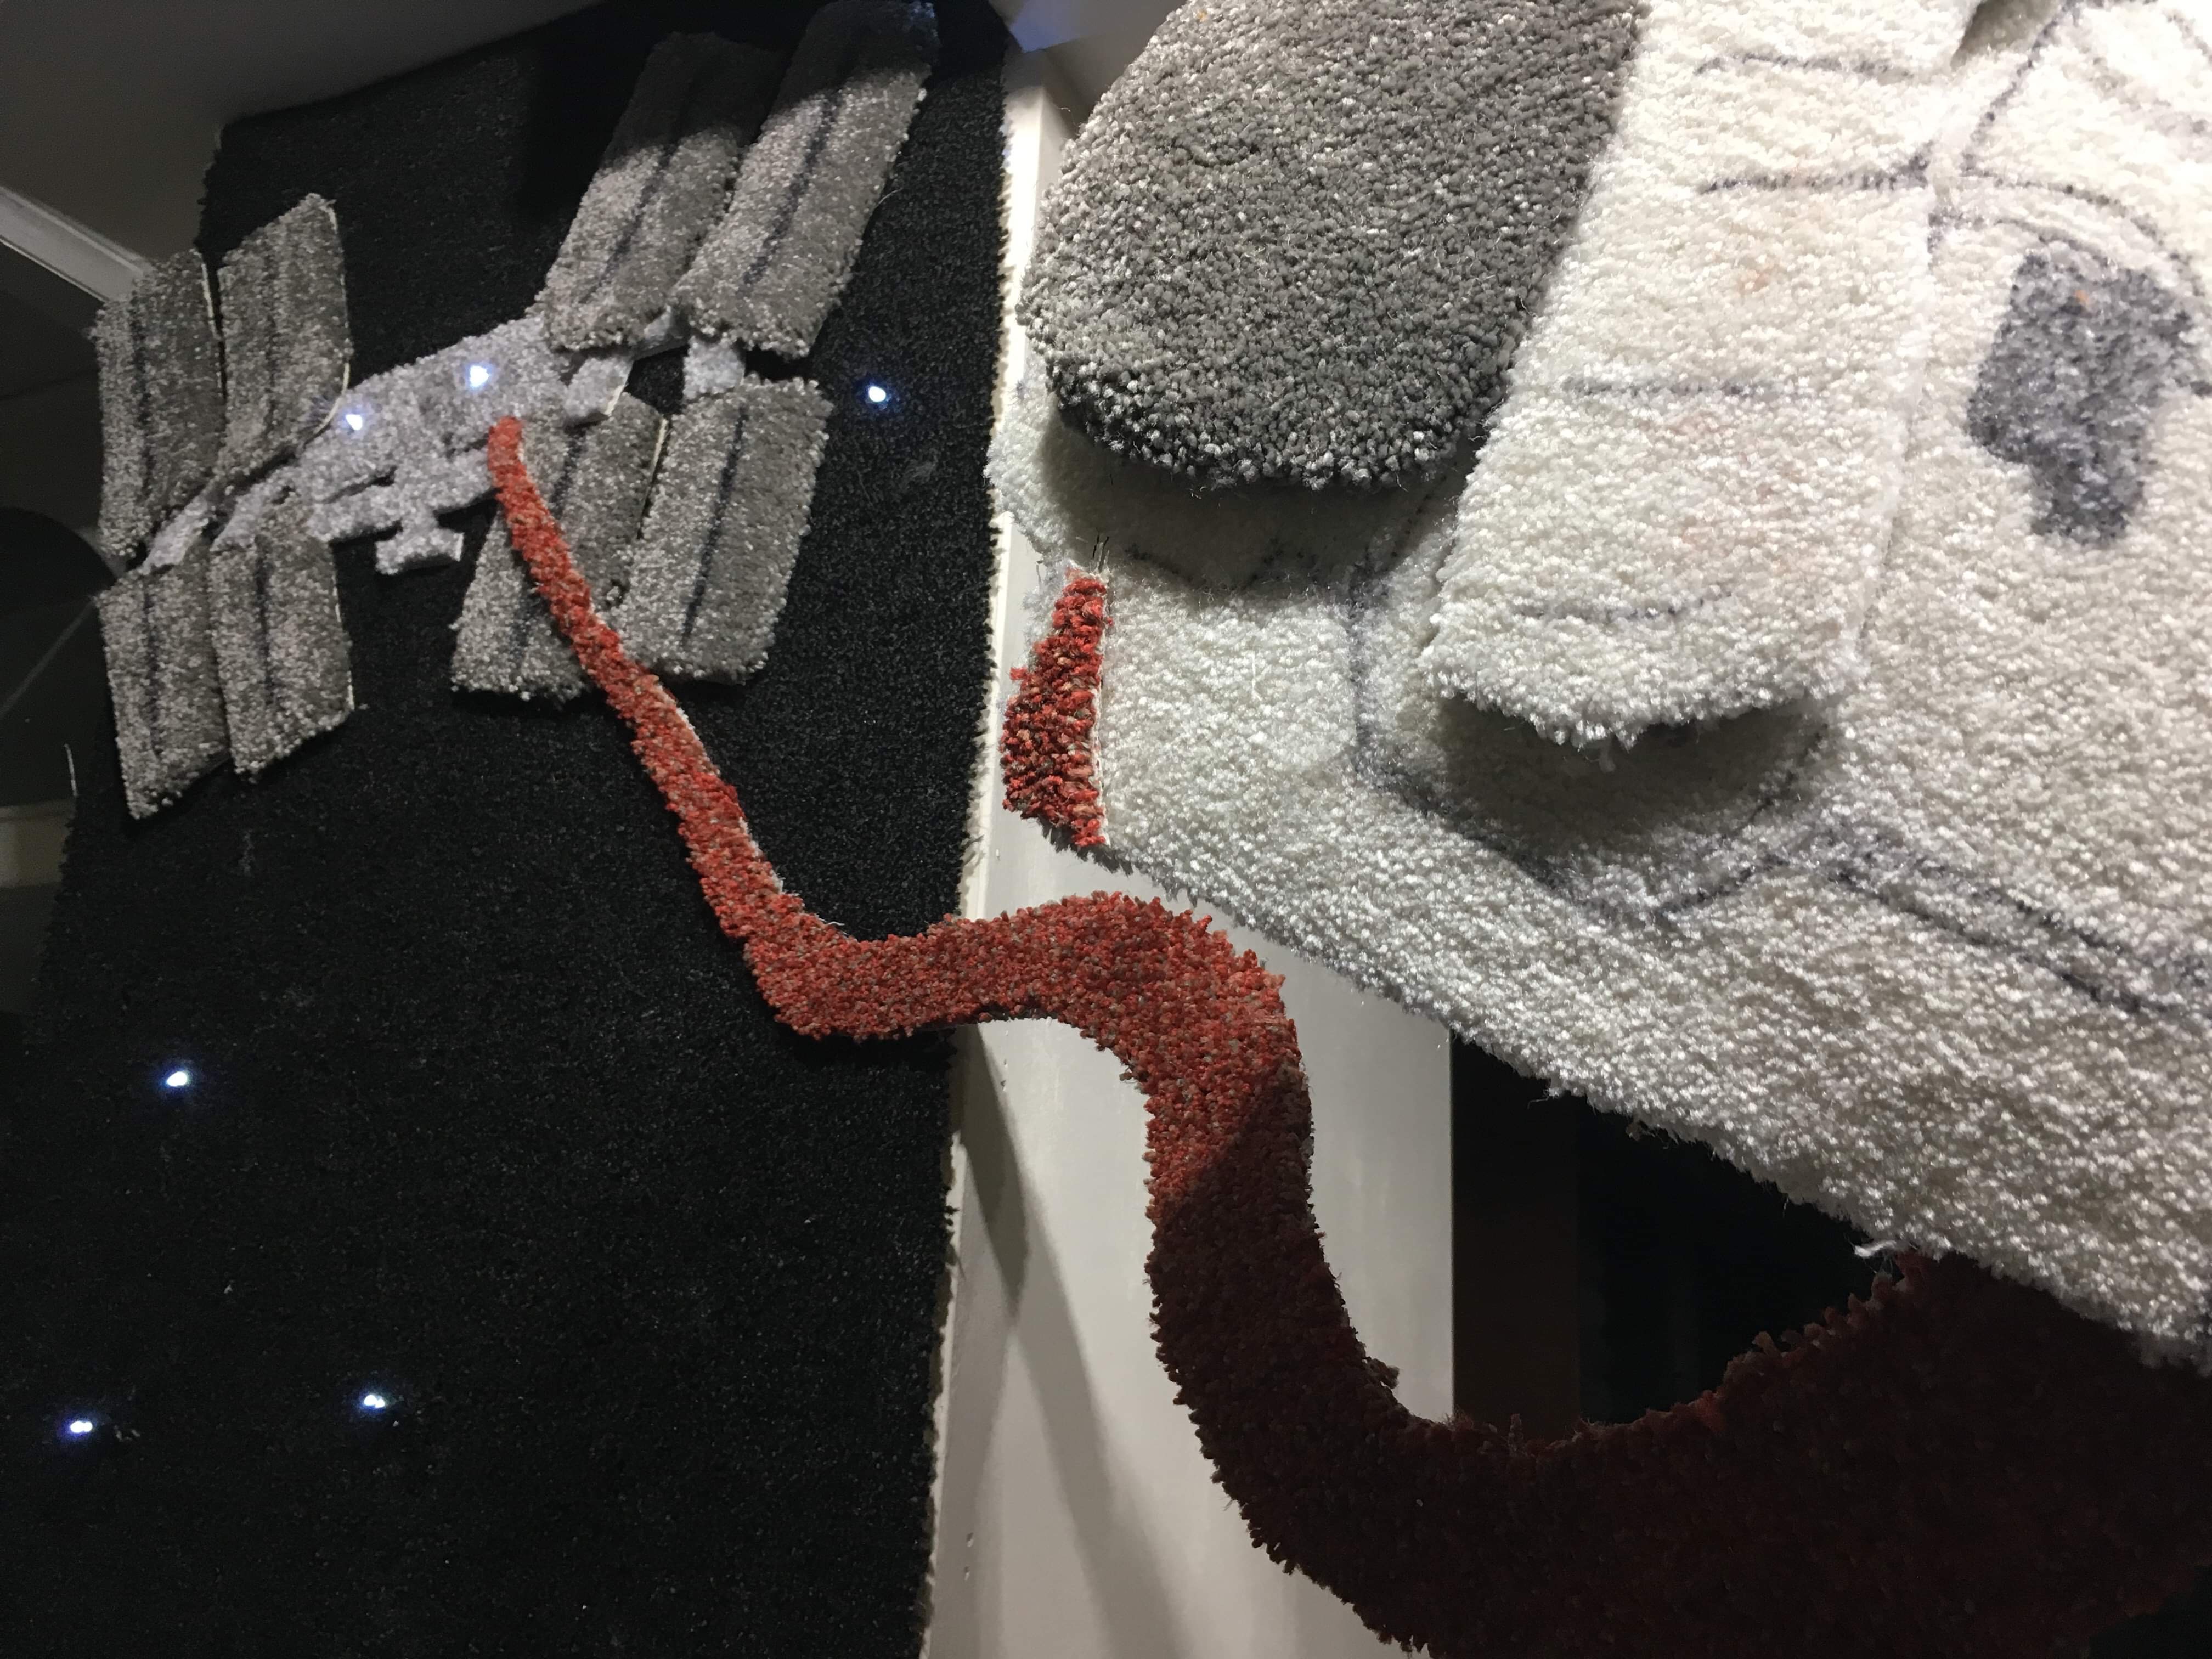 astronaut made of carpet